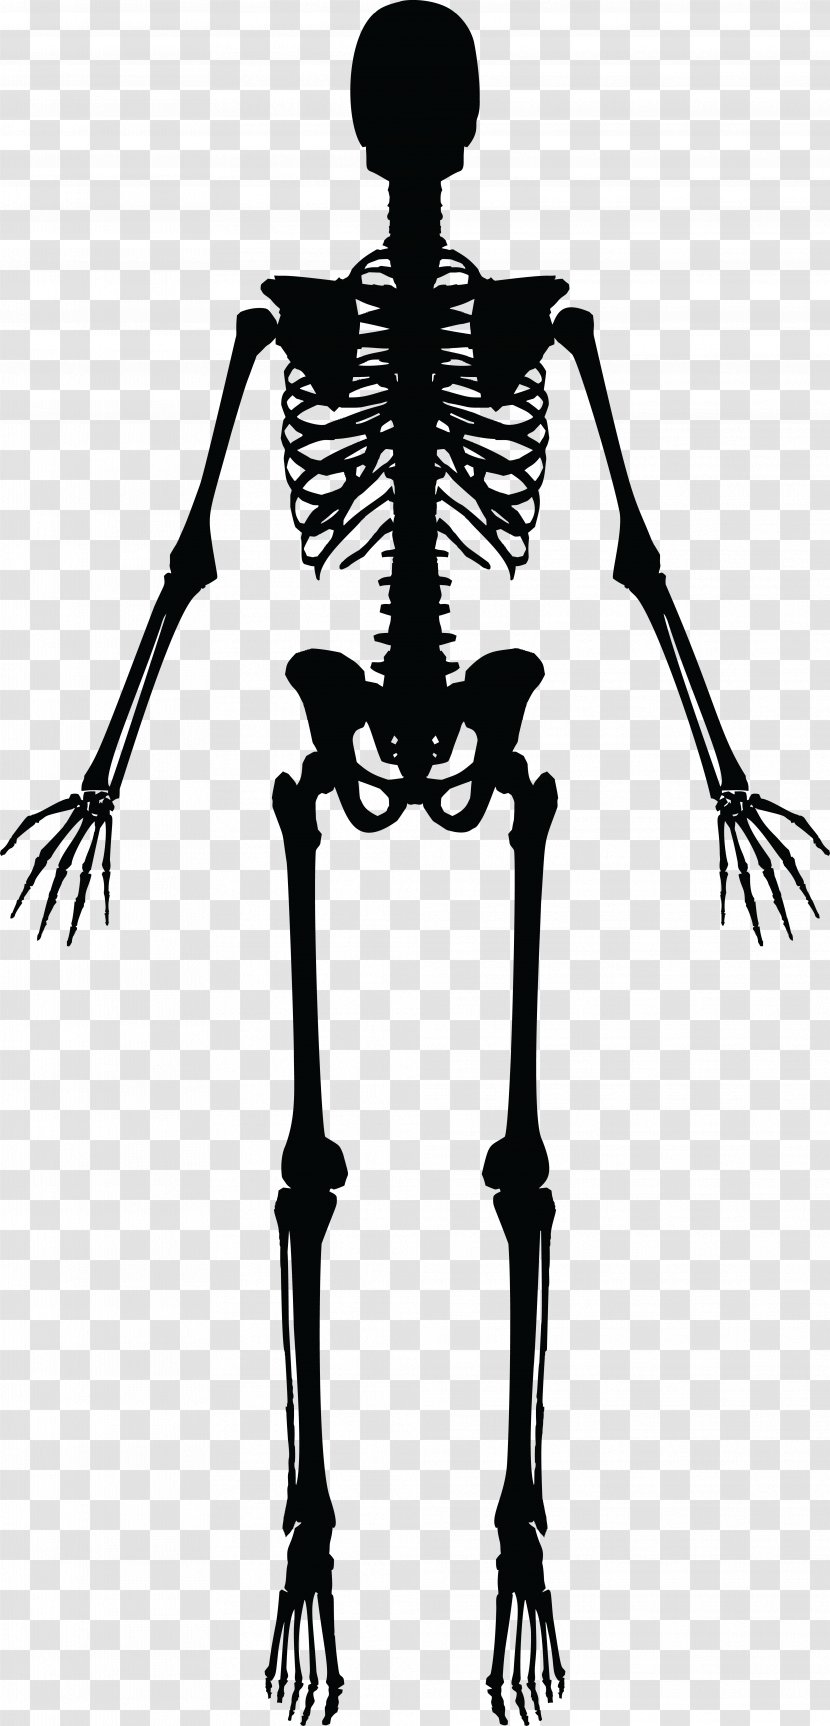 Human Skeleton Silhouette Clip Art - Organism Transparent PNG